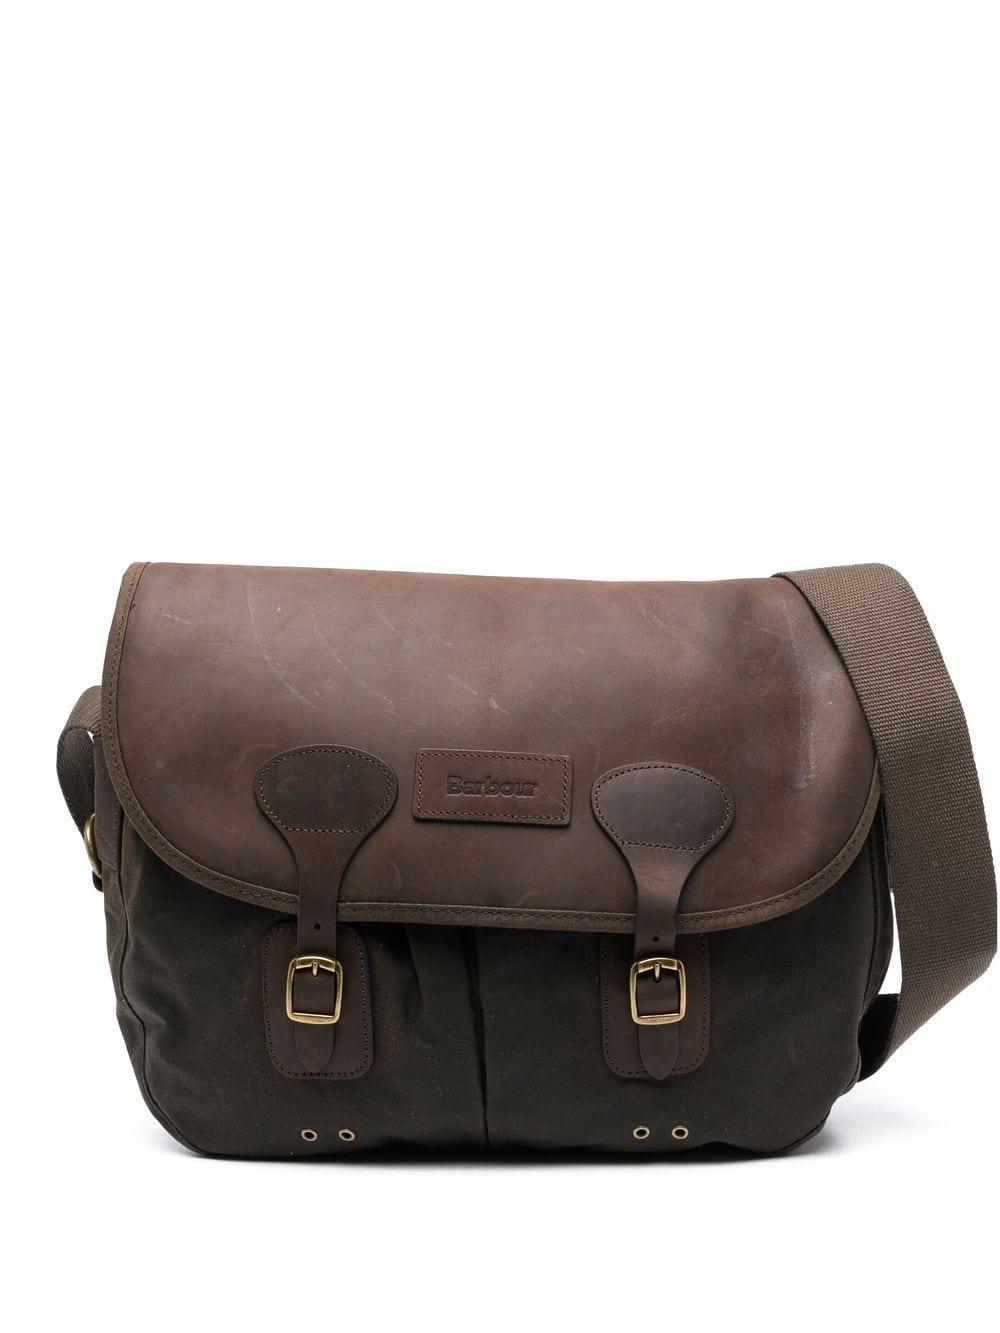 Barbour Leather Messenger Bag in Brown for Men | Lyst